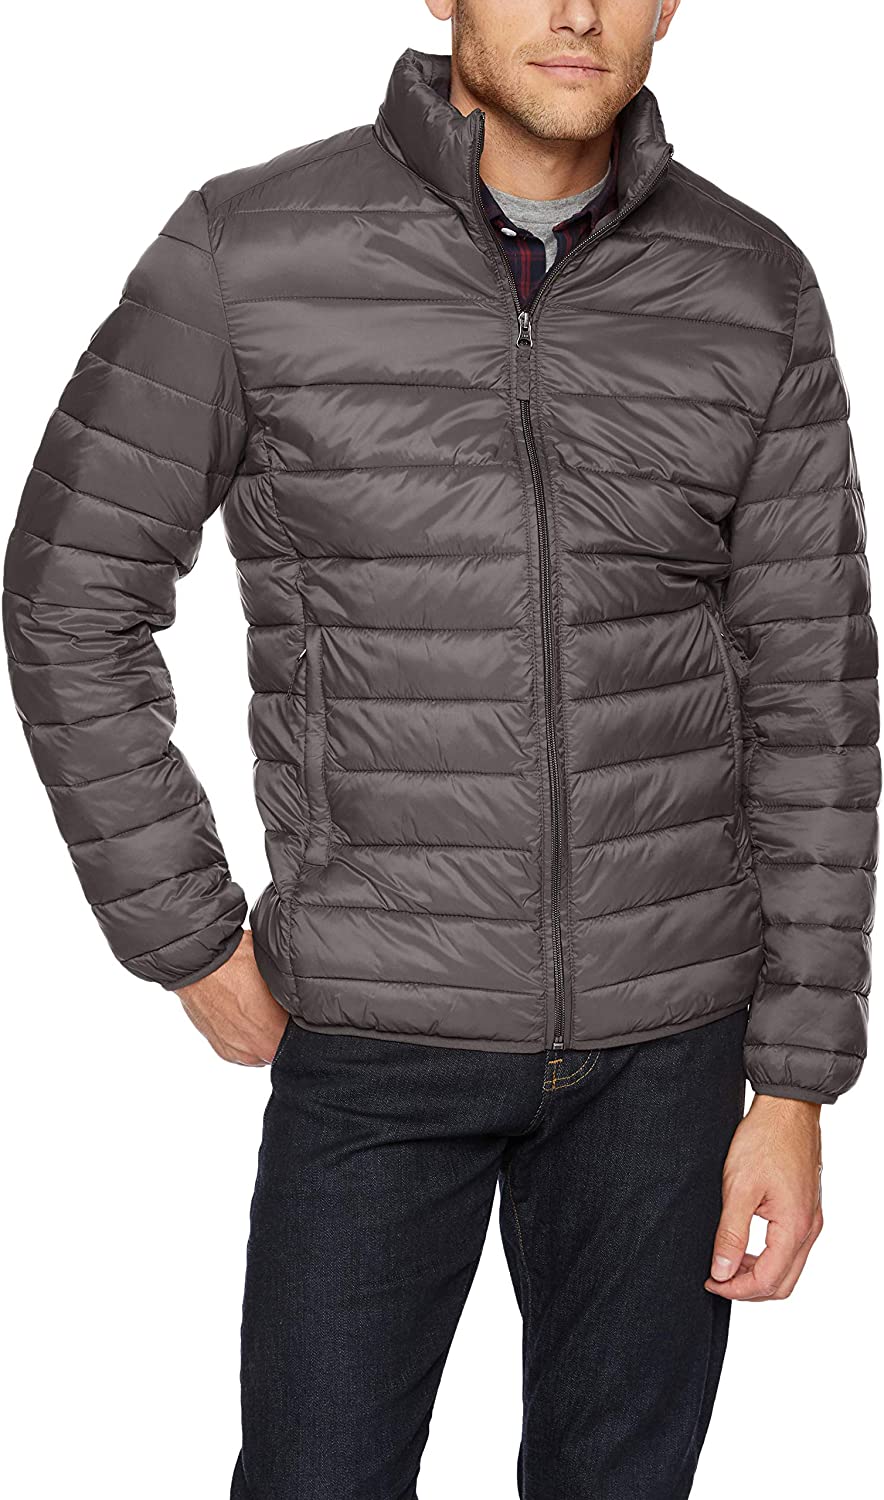 LAPASA Men's Lightweight Packable Down Jacket Breathable Winter Coat Water-Resistant M32 